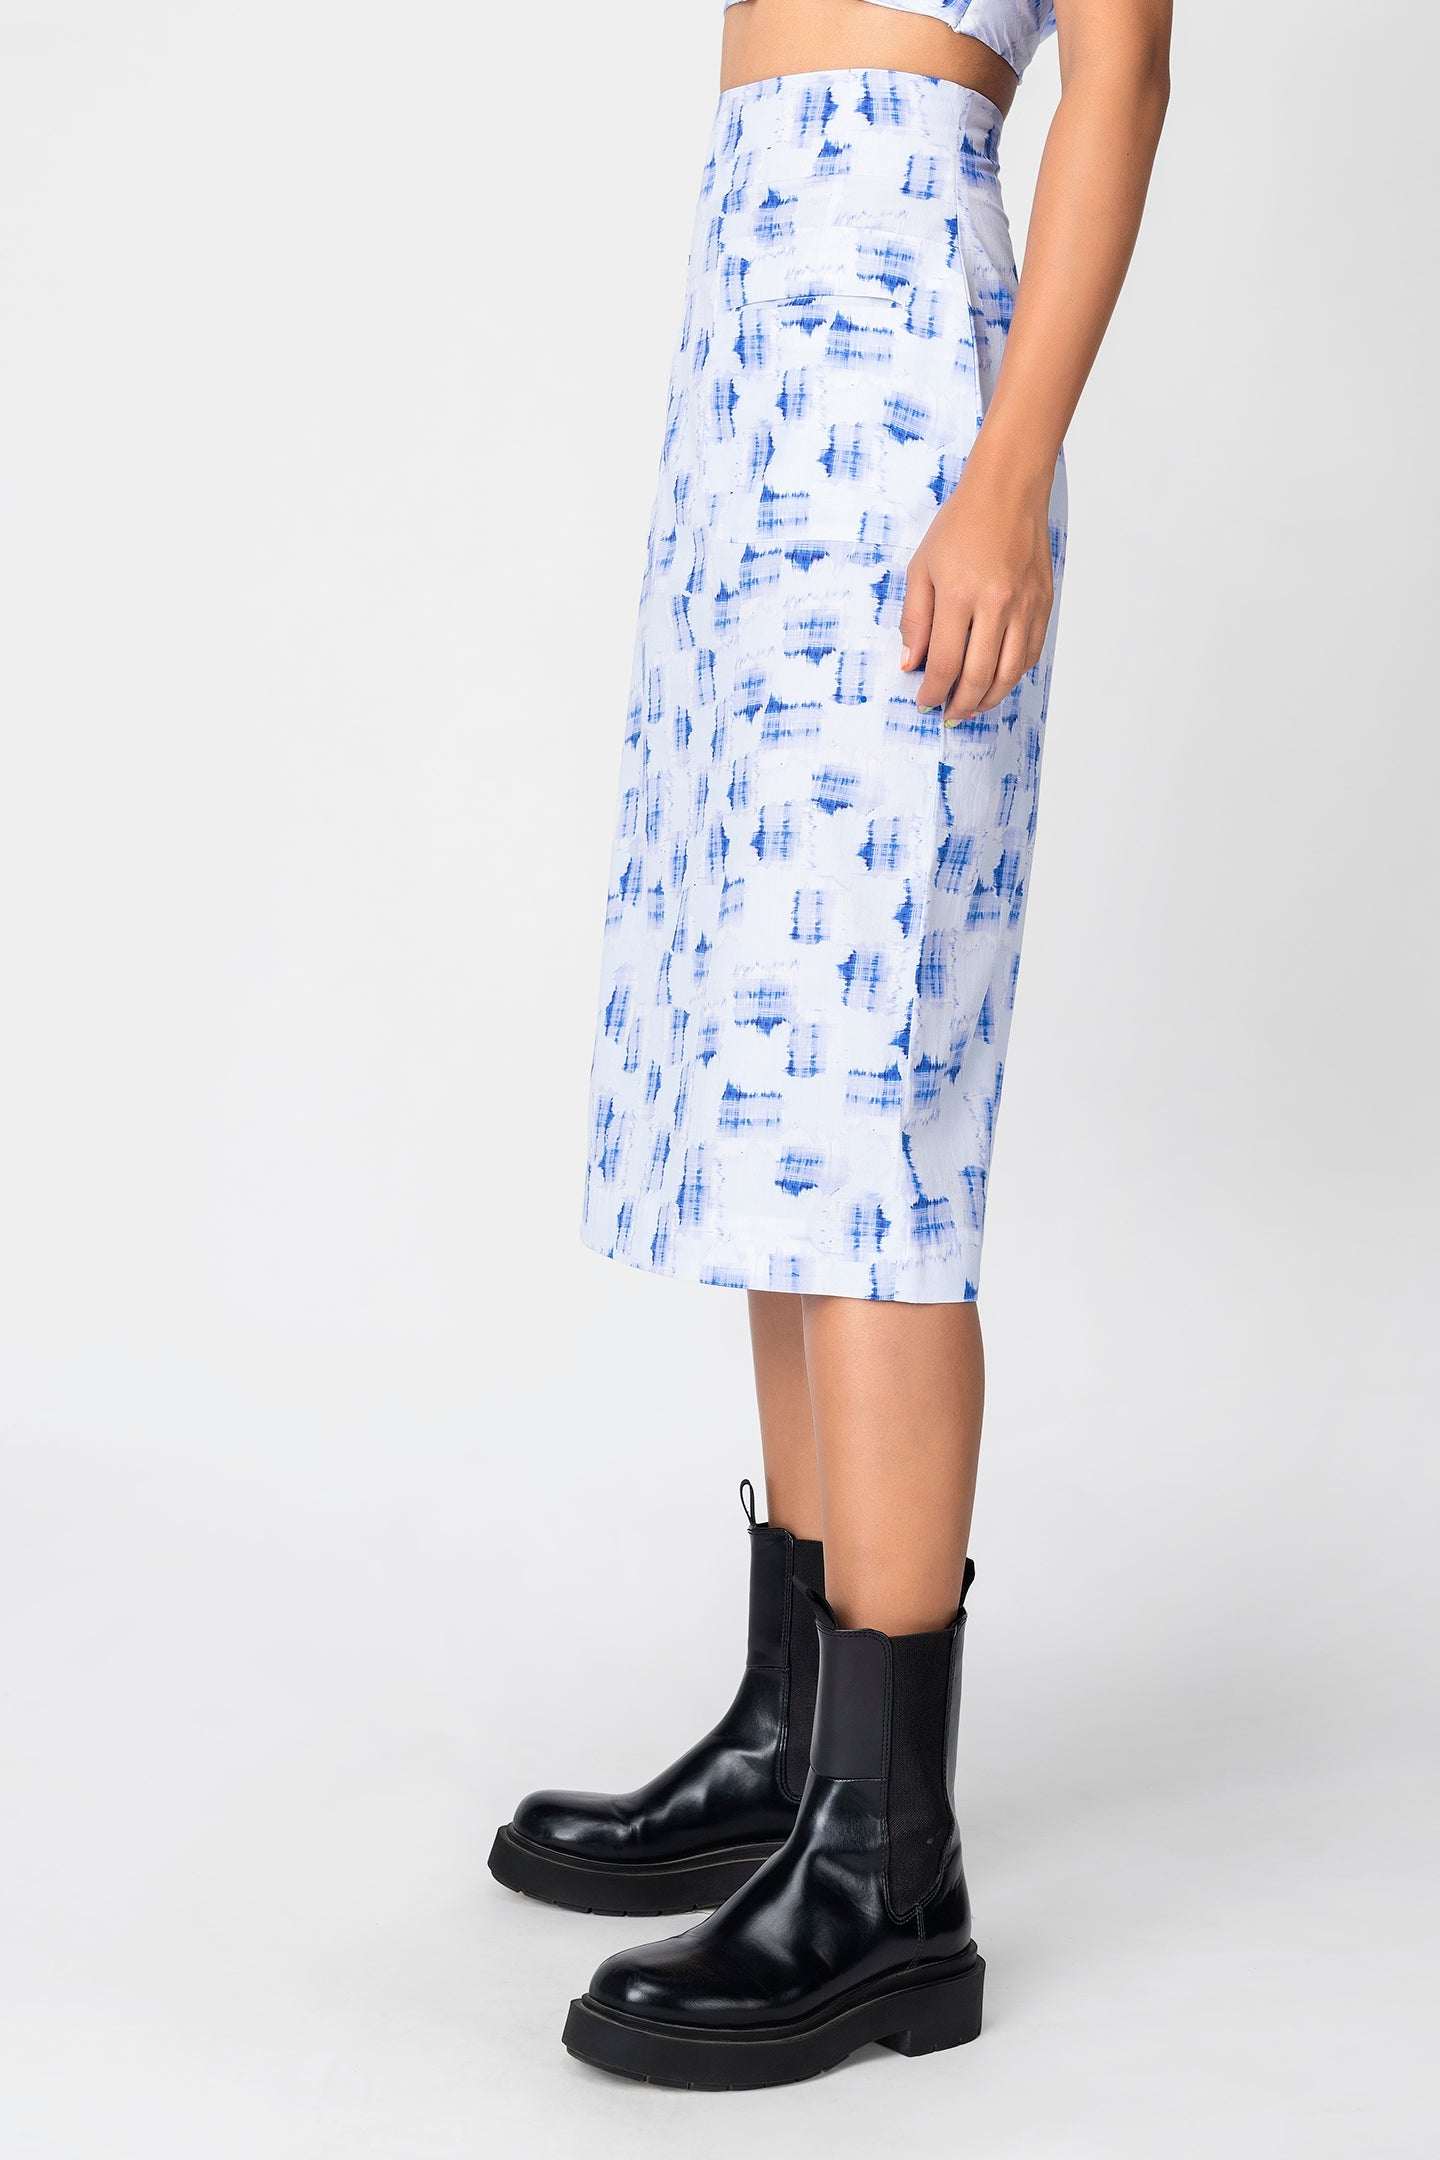 knee-length-skirt - Genes online store 2020